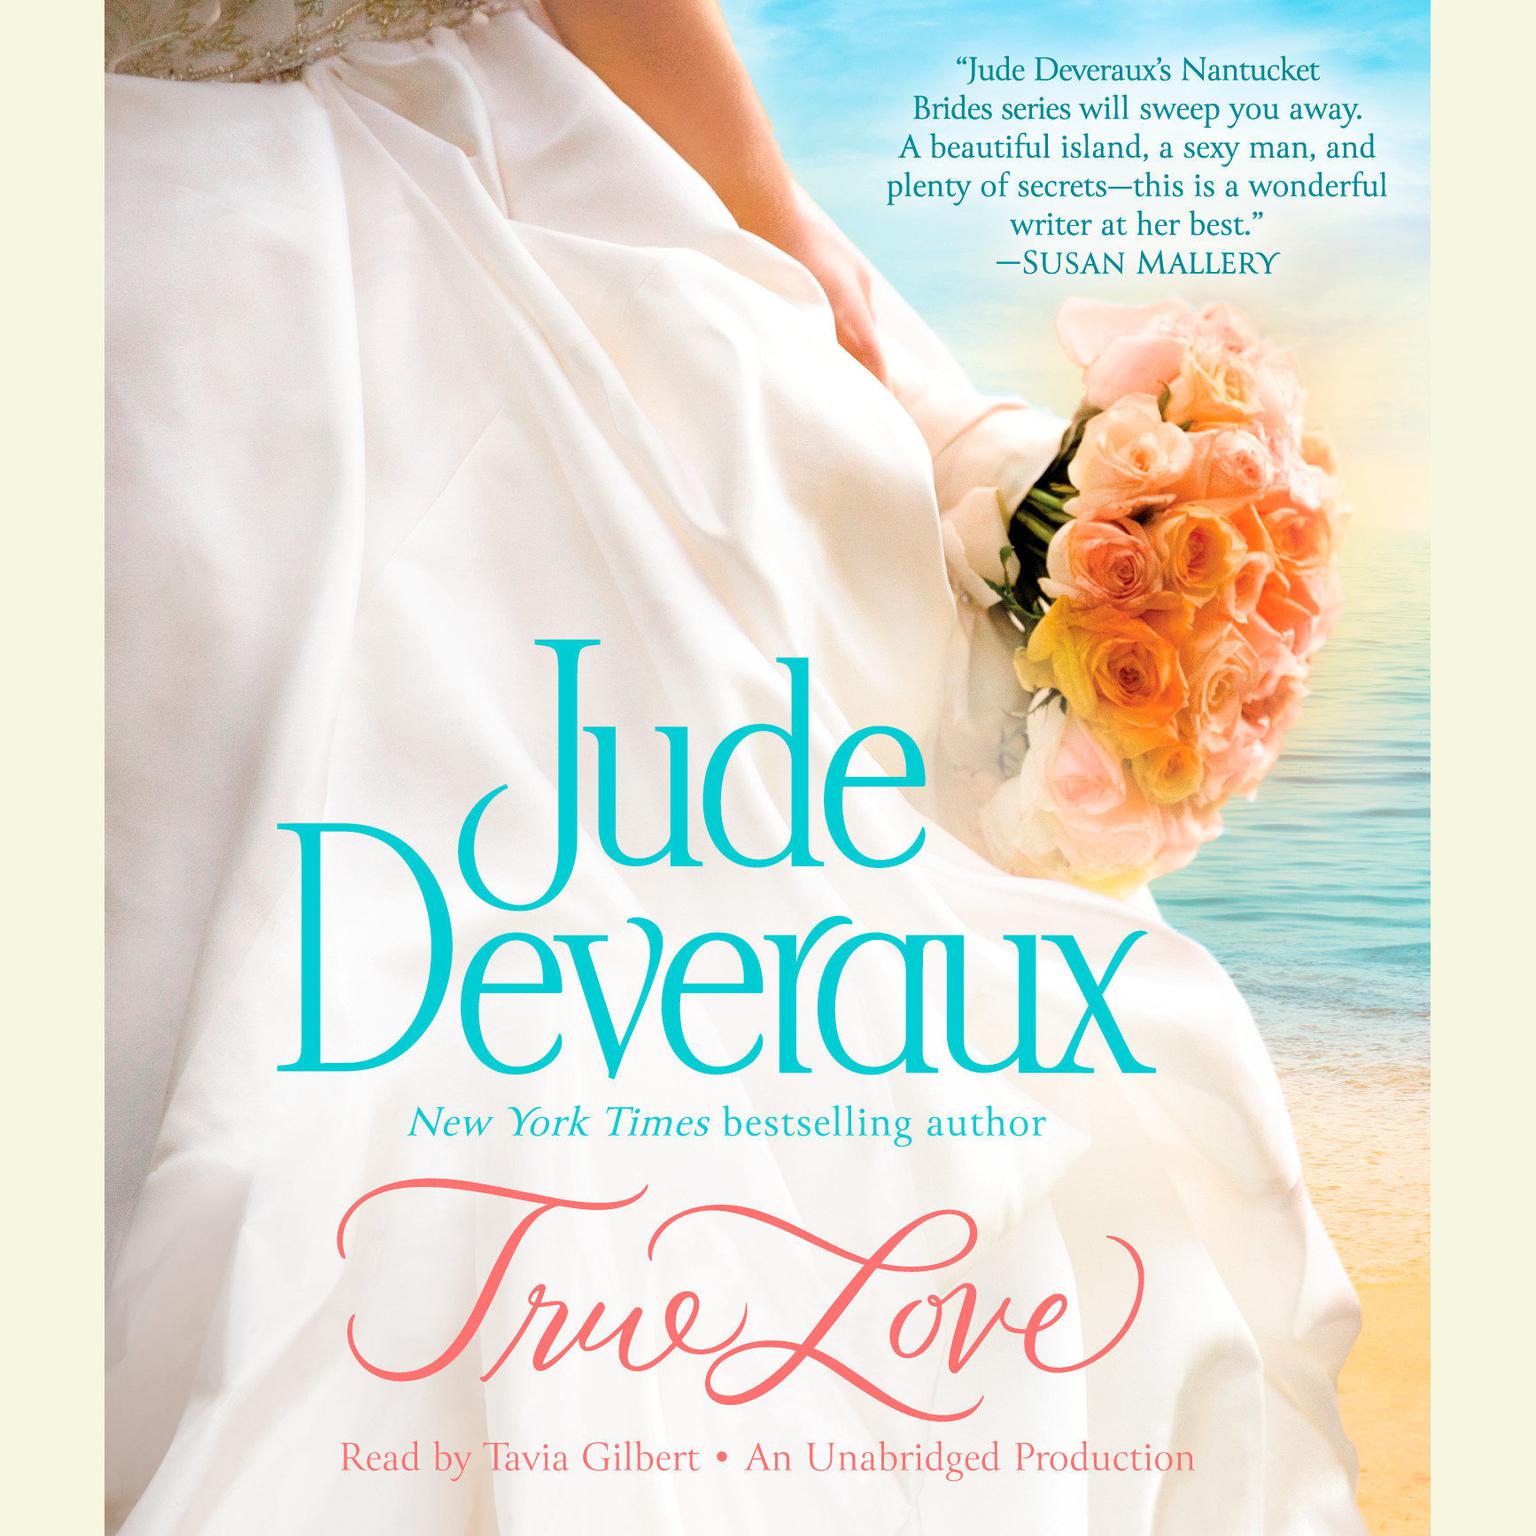 True Love Audiobook, by Jude Deveraux